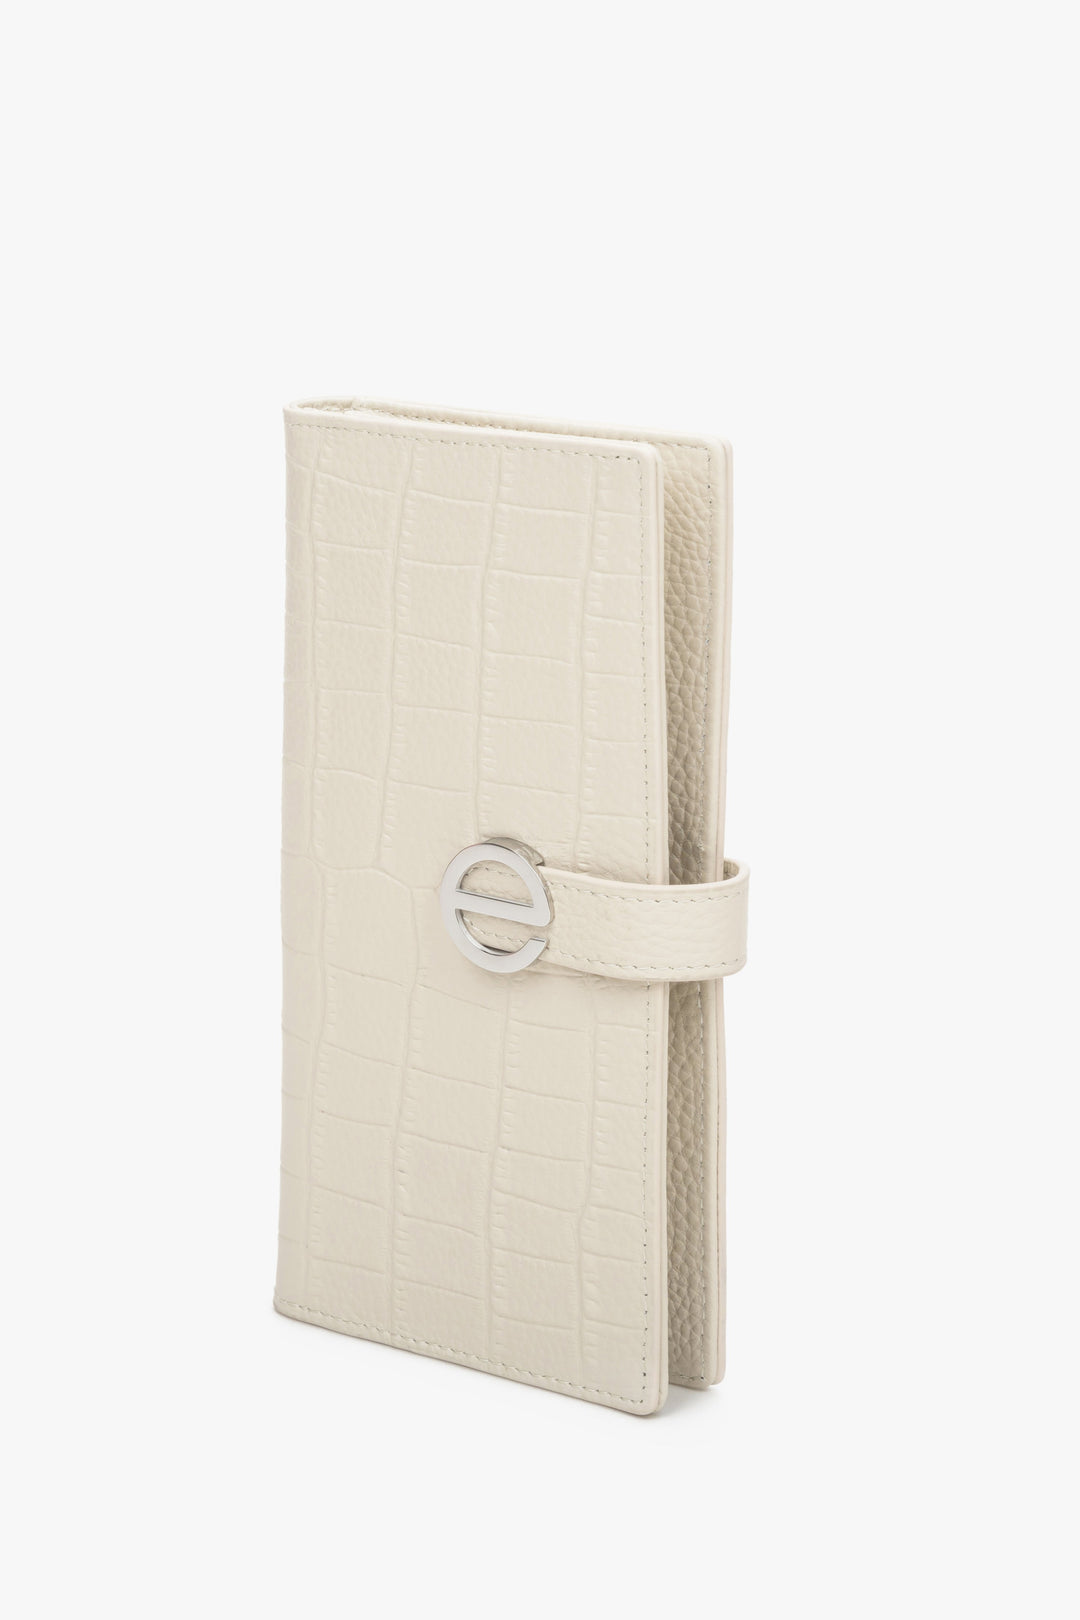 Light beige, large women's wallet with silver fittings by Estro.